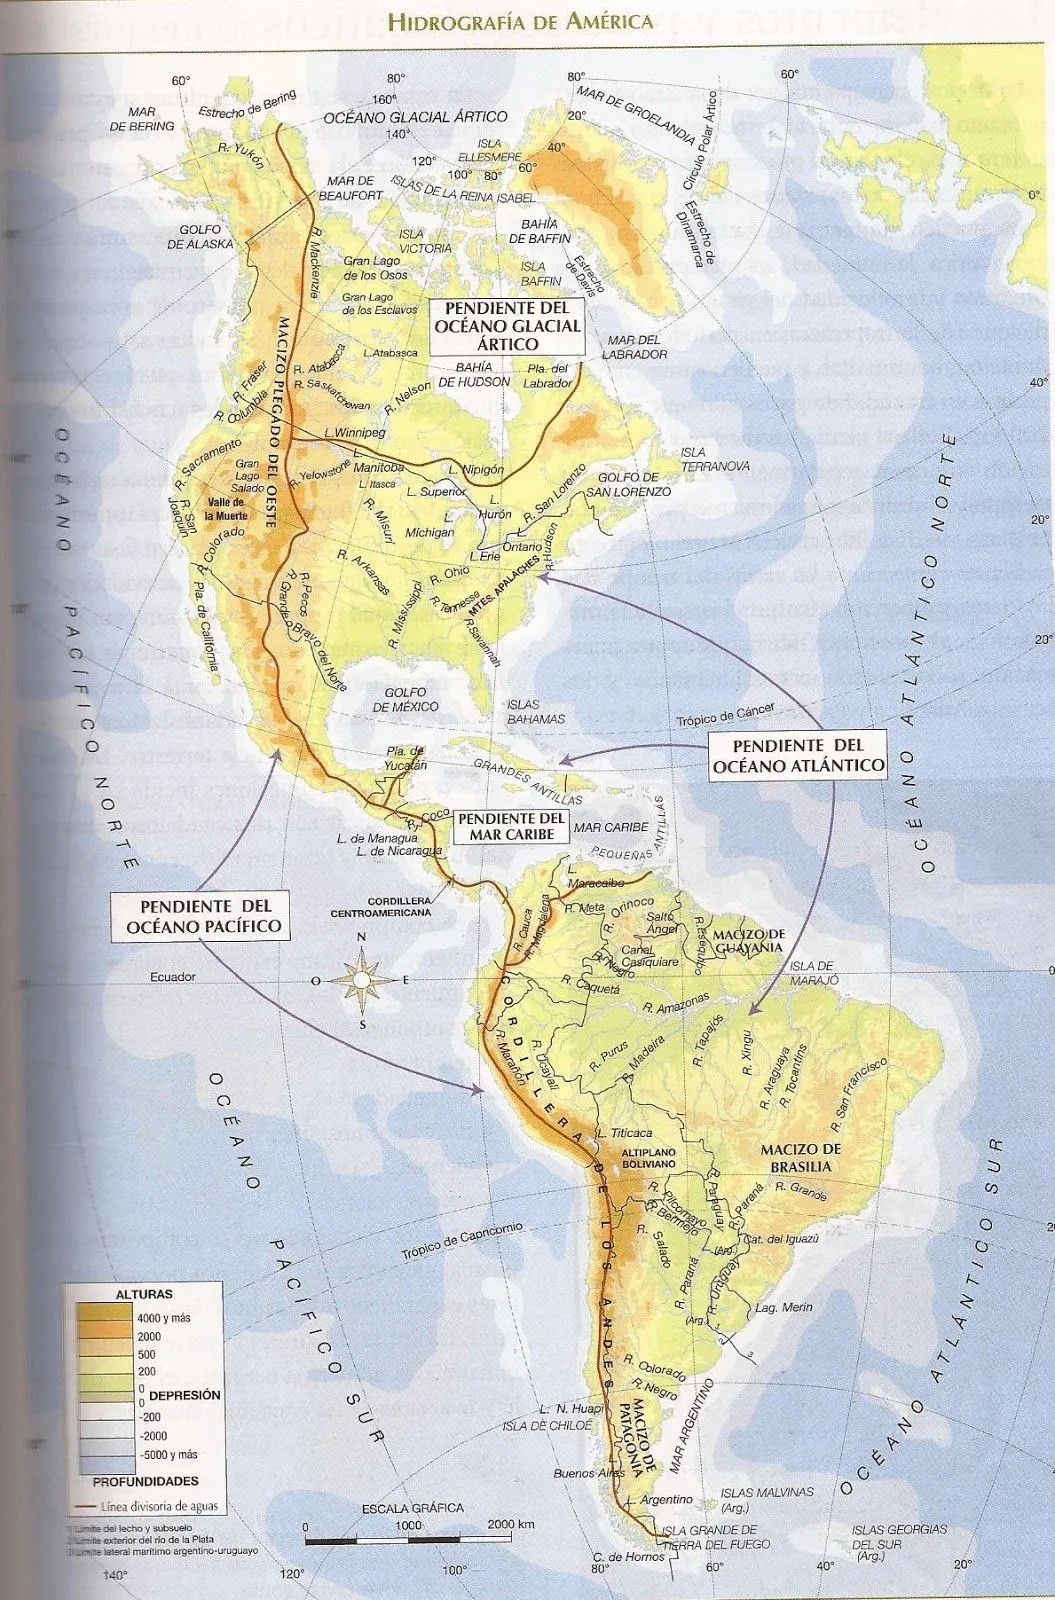 Mapa con la hidrografia de america - Imagui